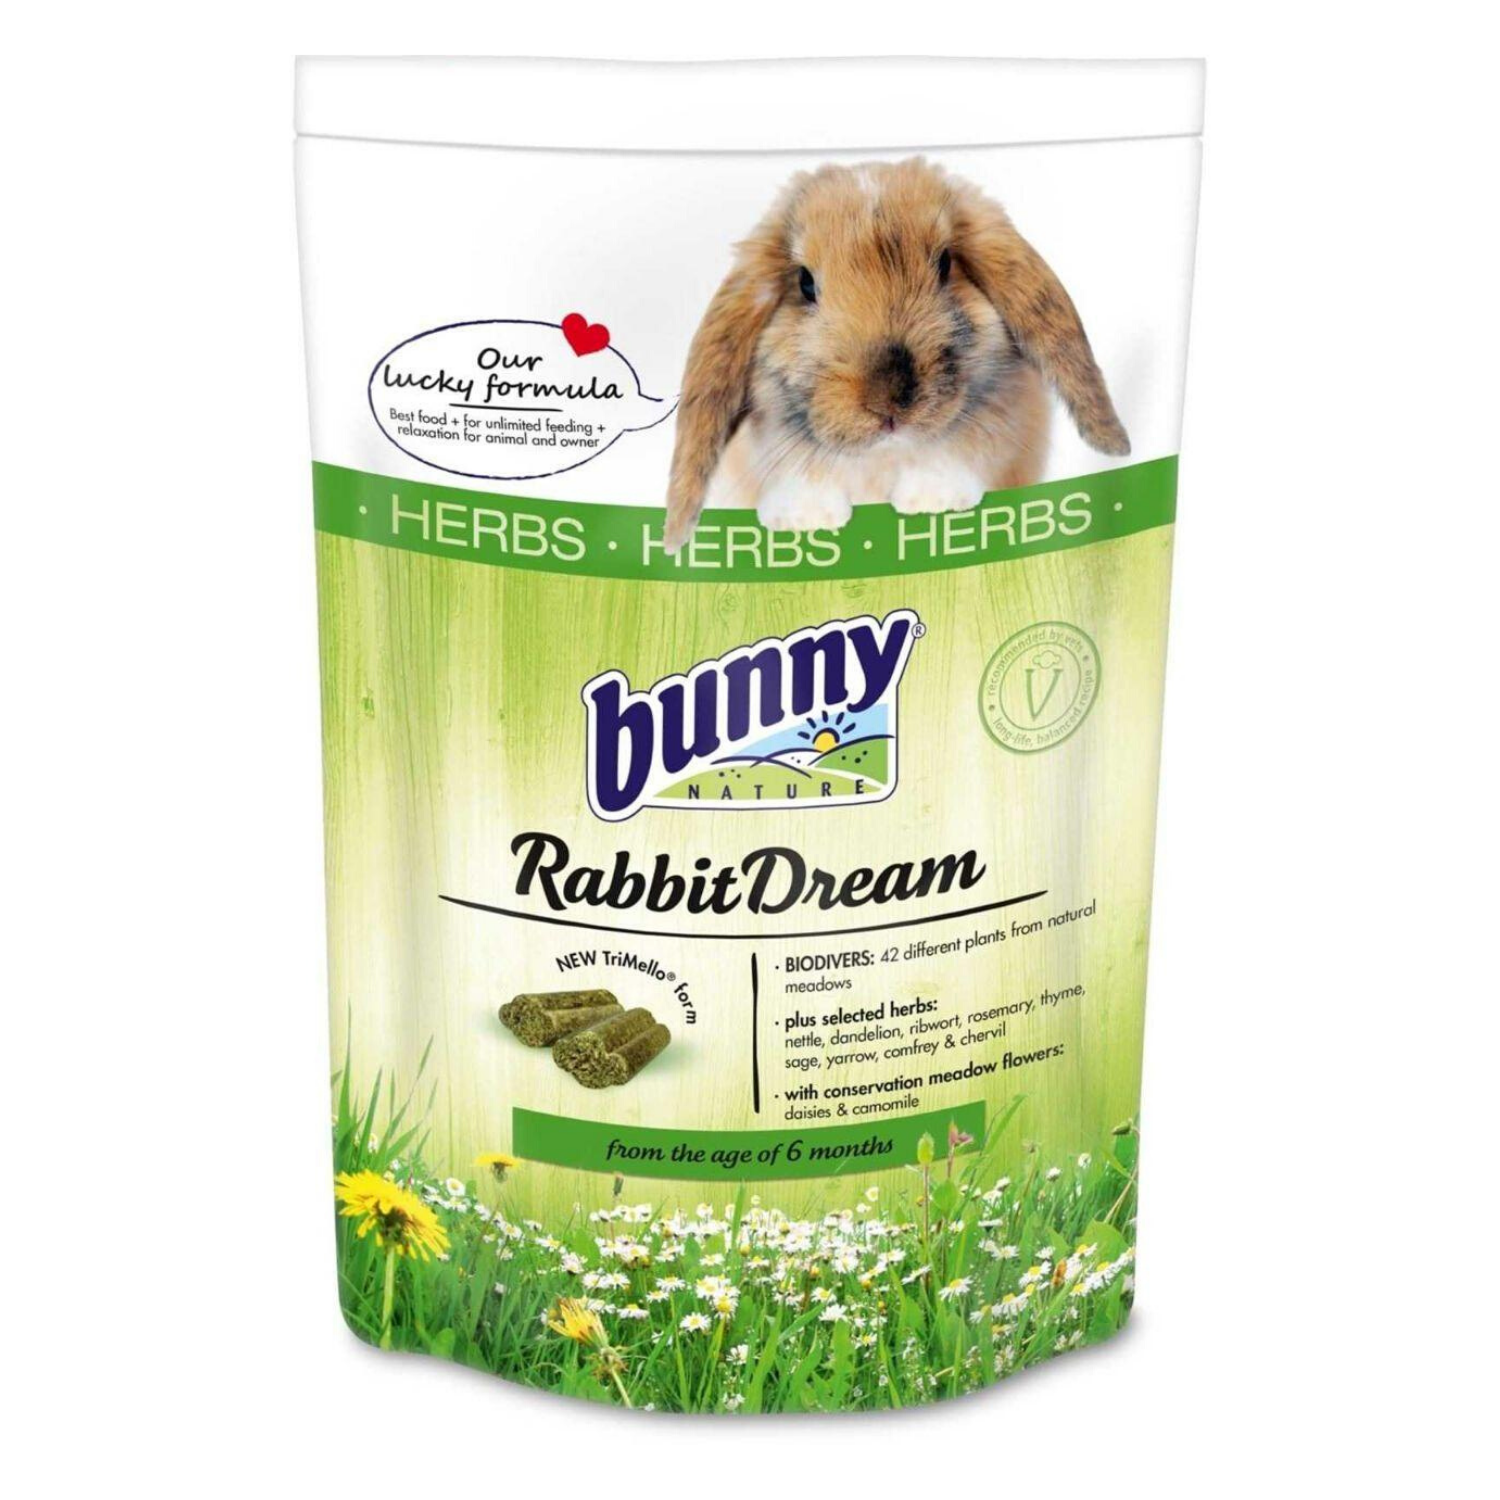 Bunny Nature Rabbit Dream Herbs - 750g / 1.5kg